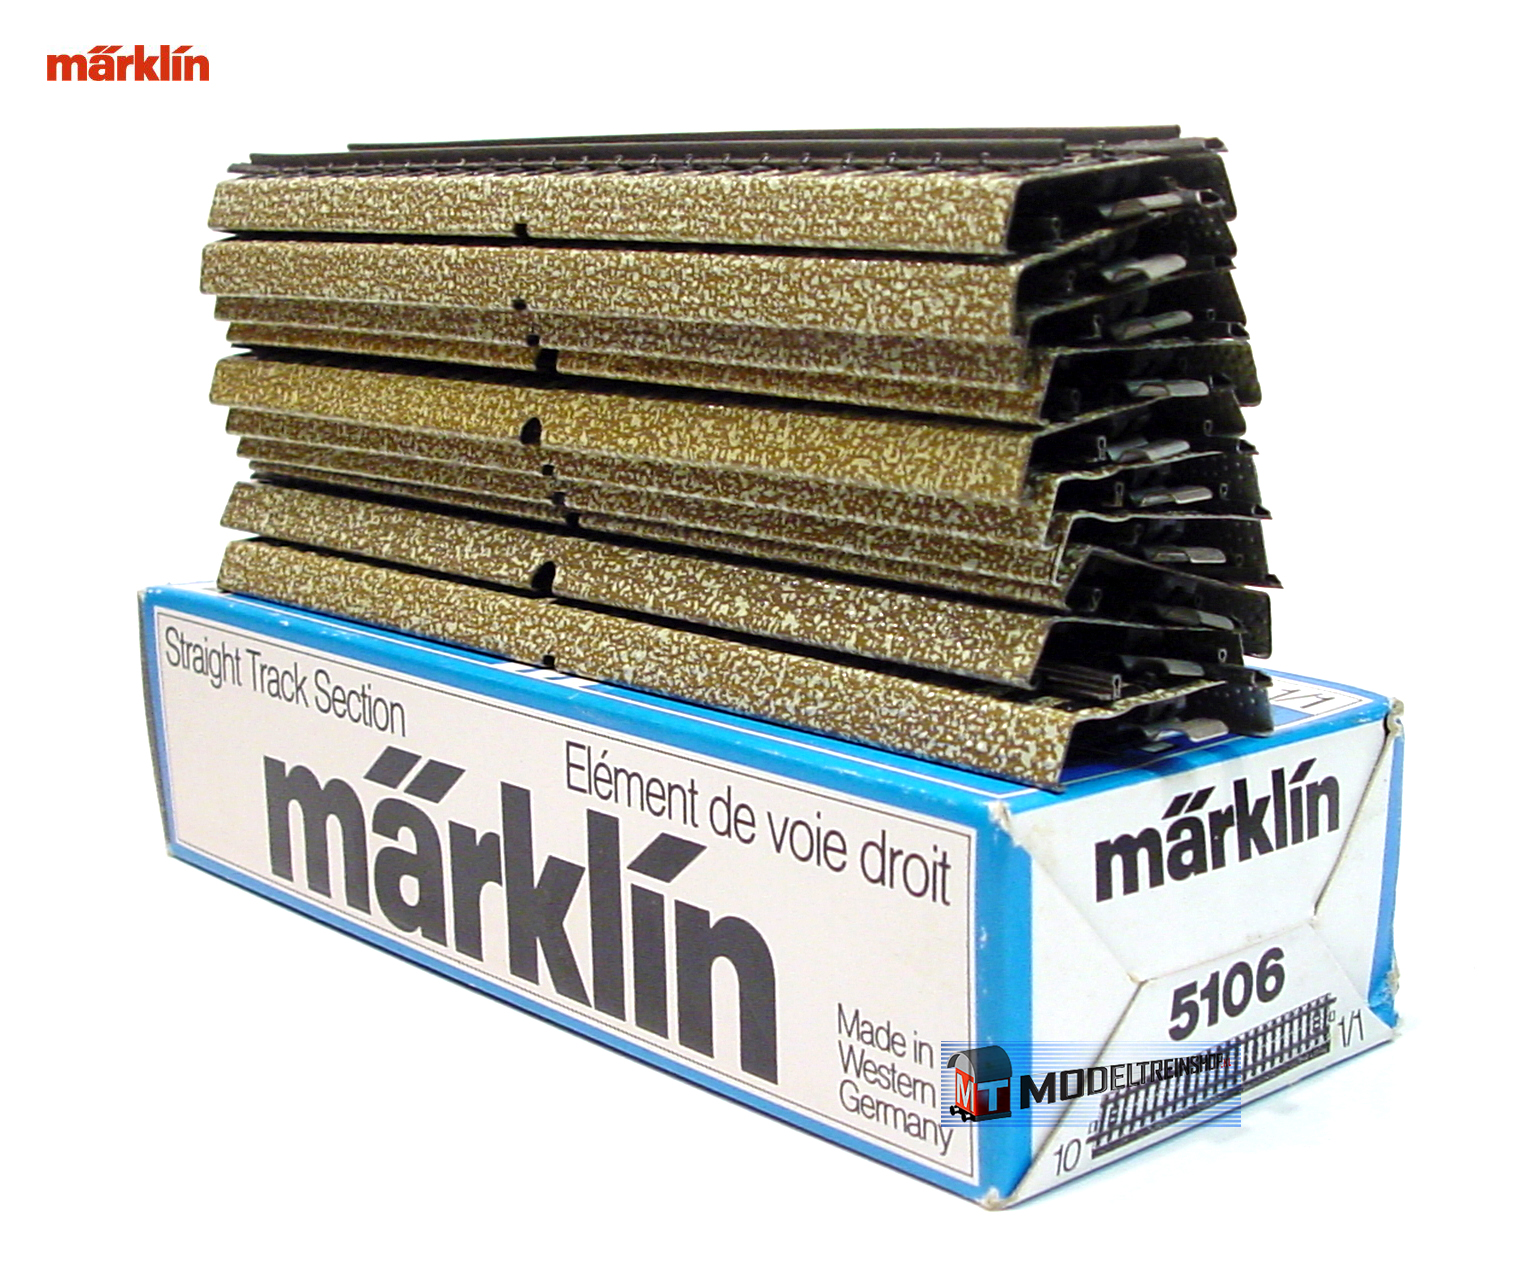 Marklin M Rail H0 5106 Recht 1/1 10 stuks in OVP - Modeltreinshop